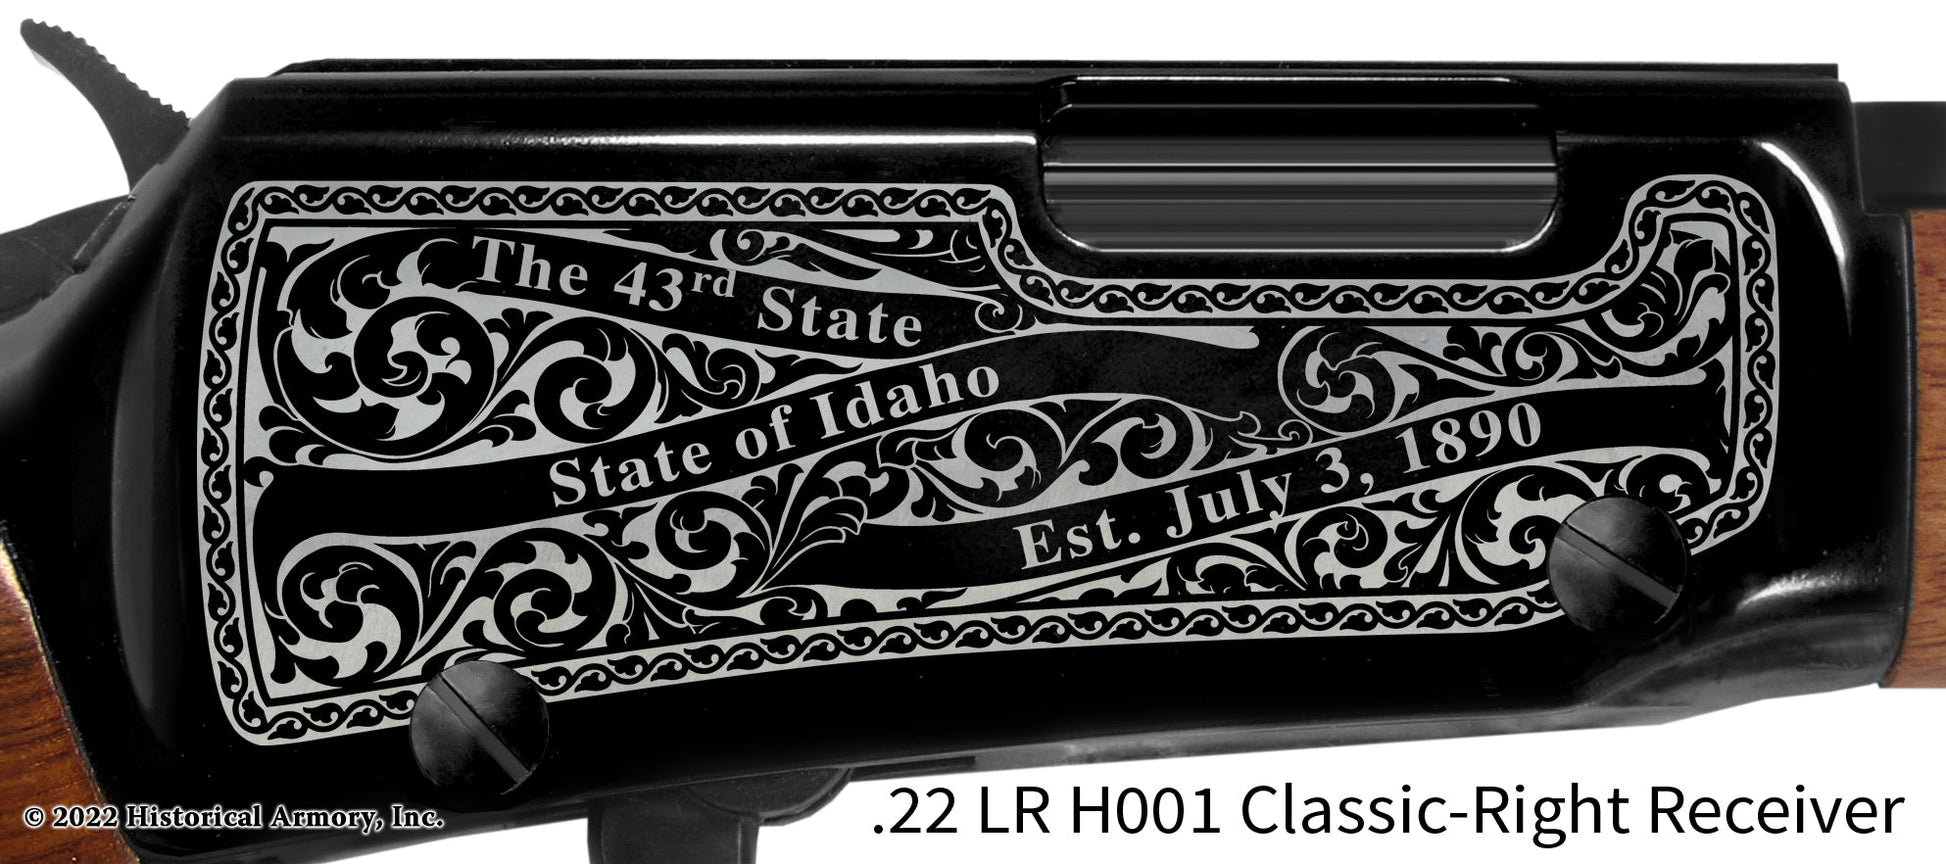 Custer County Idaho Engraved Henry H001 Rifle